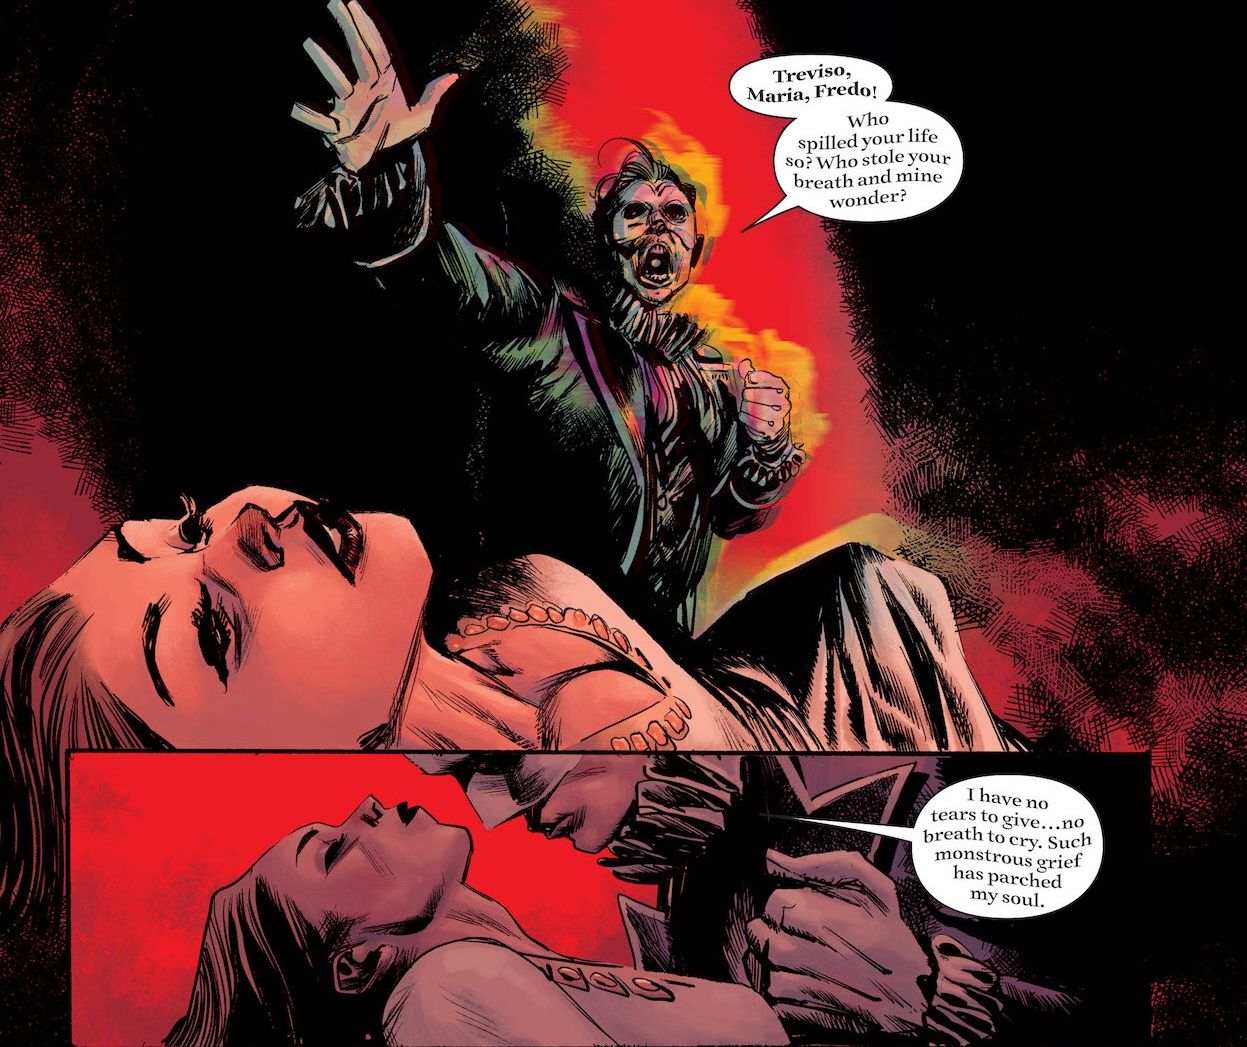 The opera in Detective Comics 1062